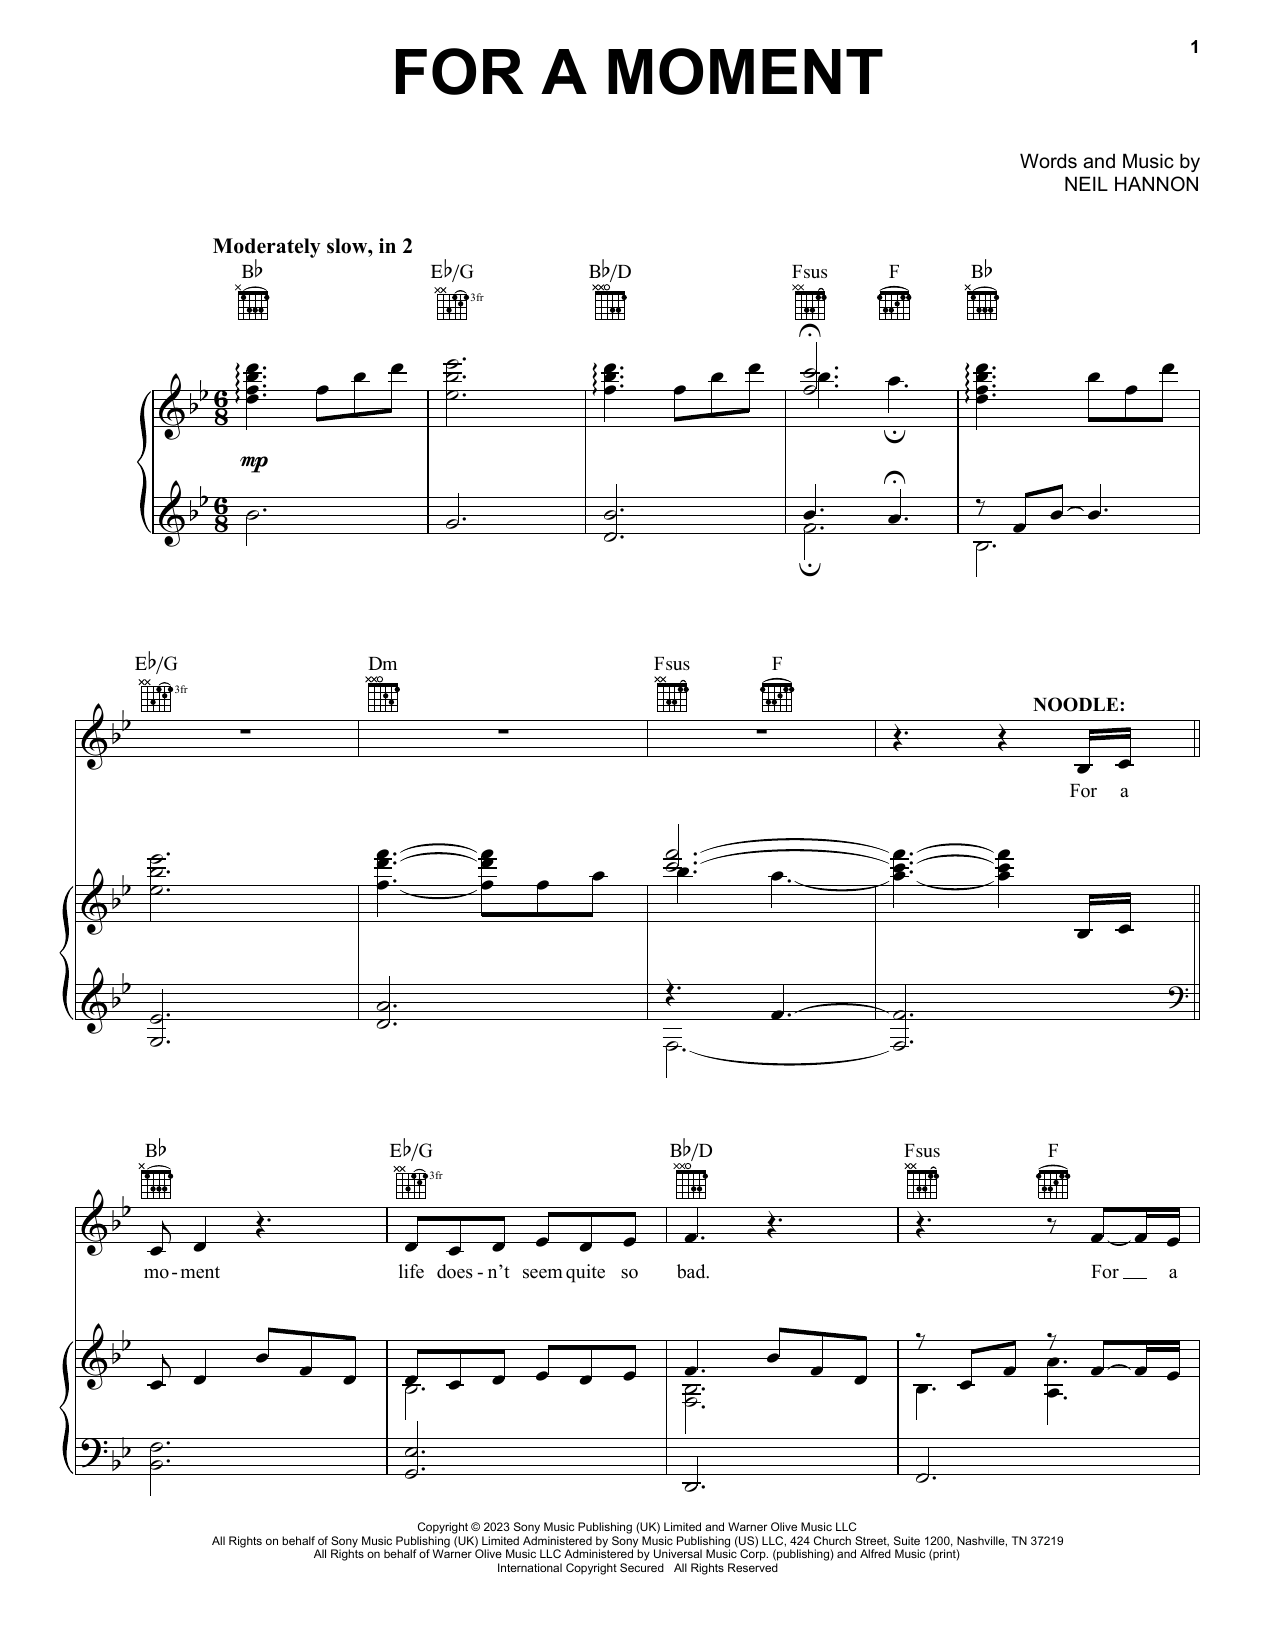 Calah Lane & Timothée Chalamet For A Moment (from Wonka) sheet music notes printable PDF score